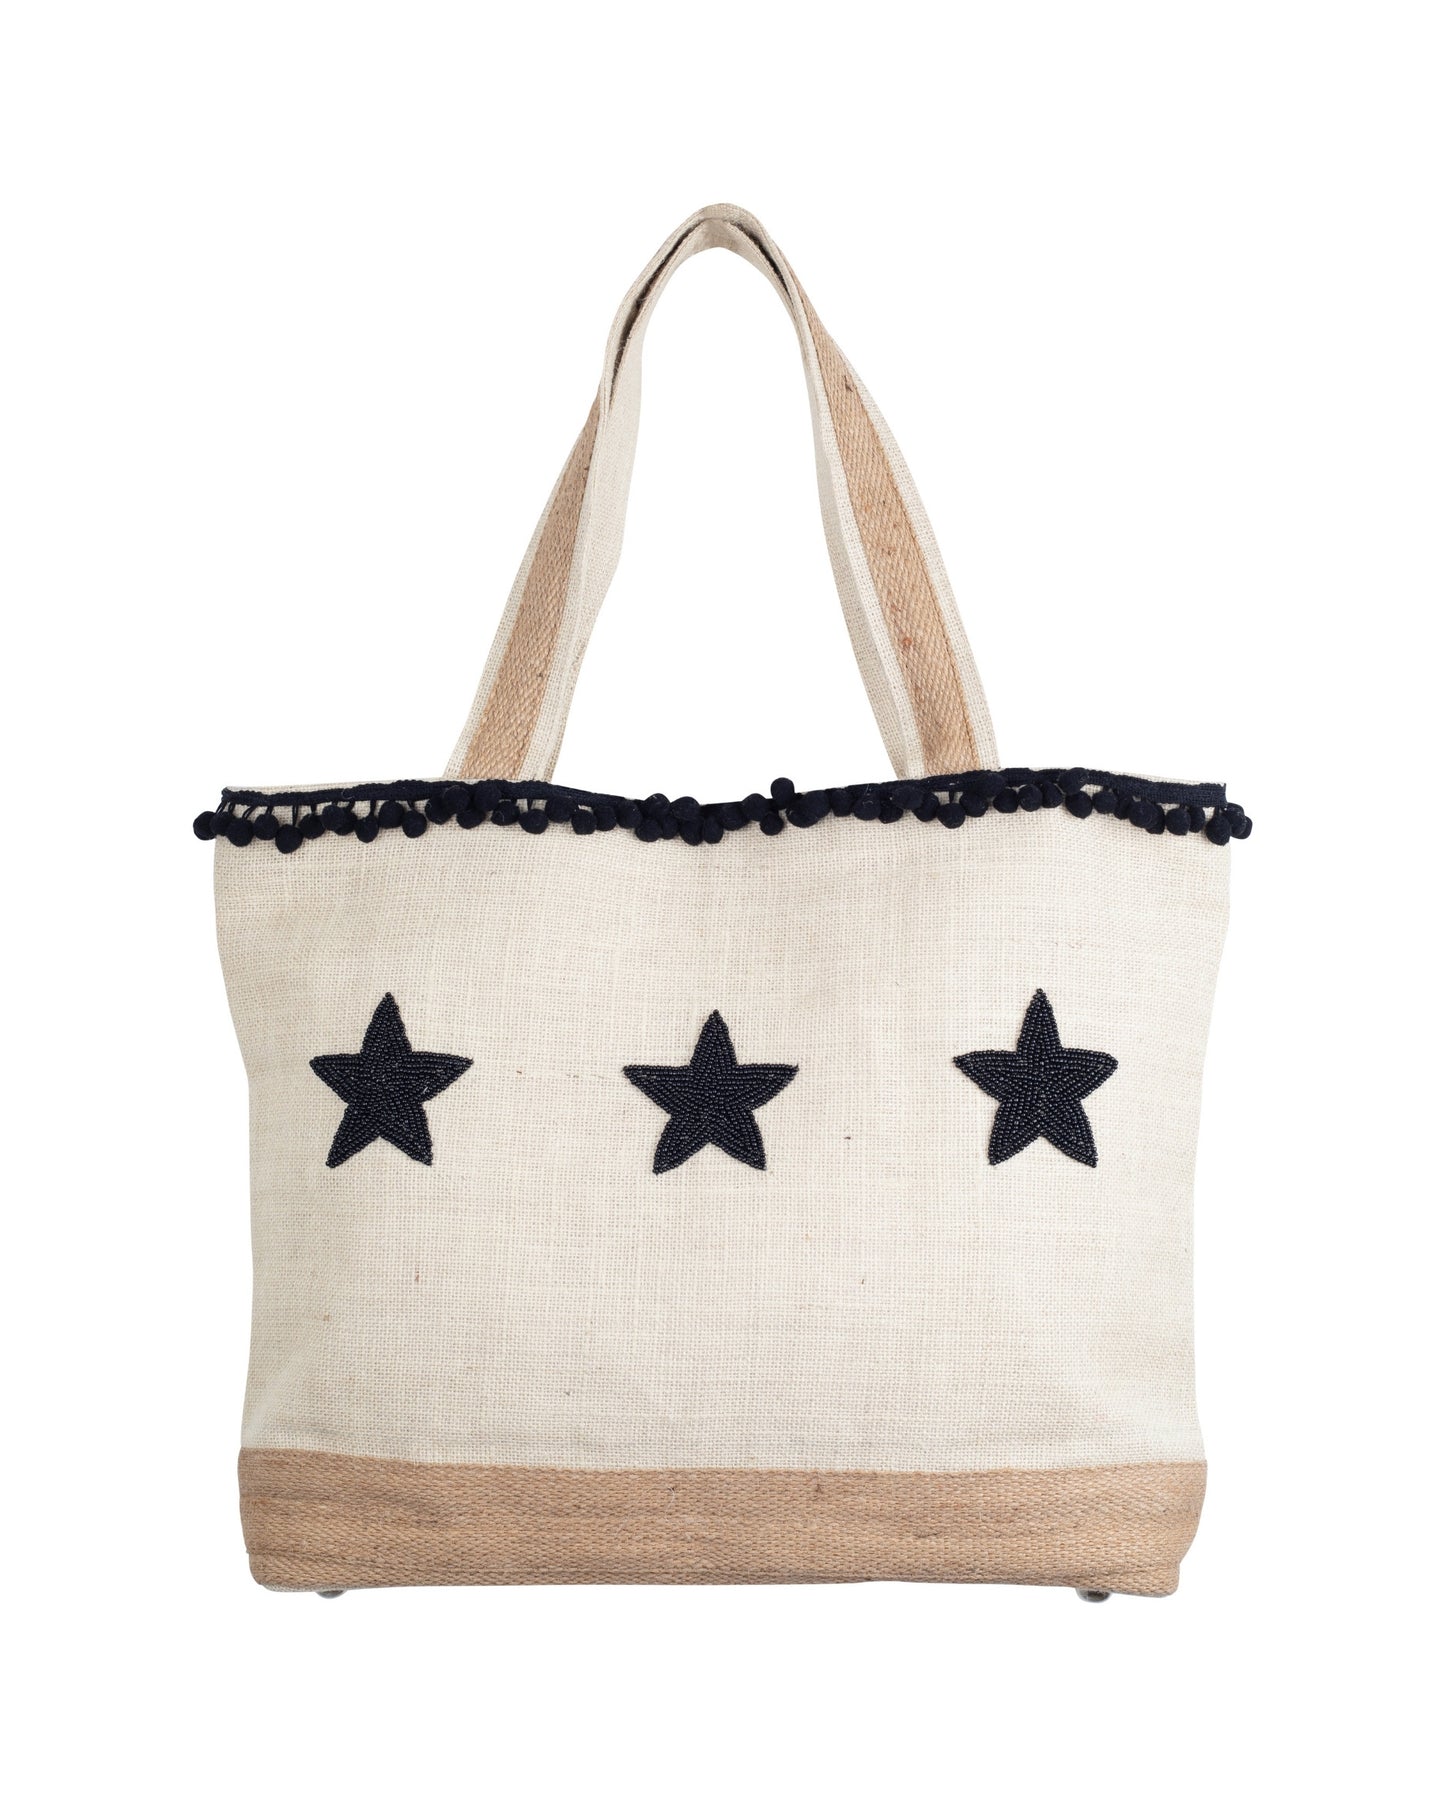 The ' Star' Tote beach Bag